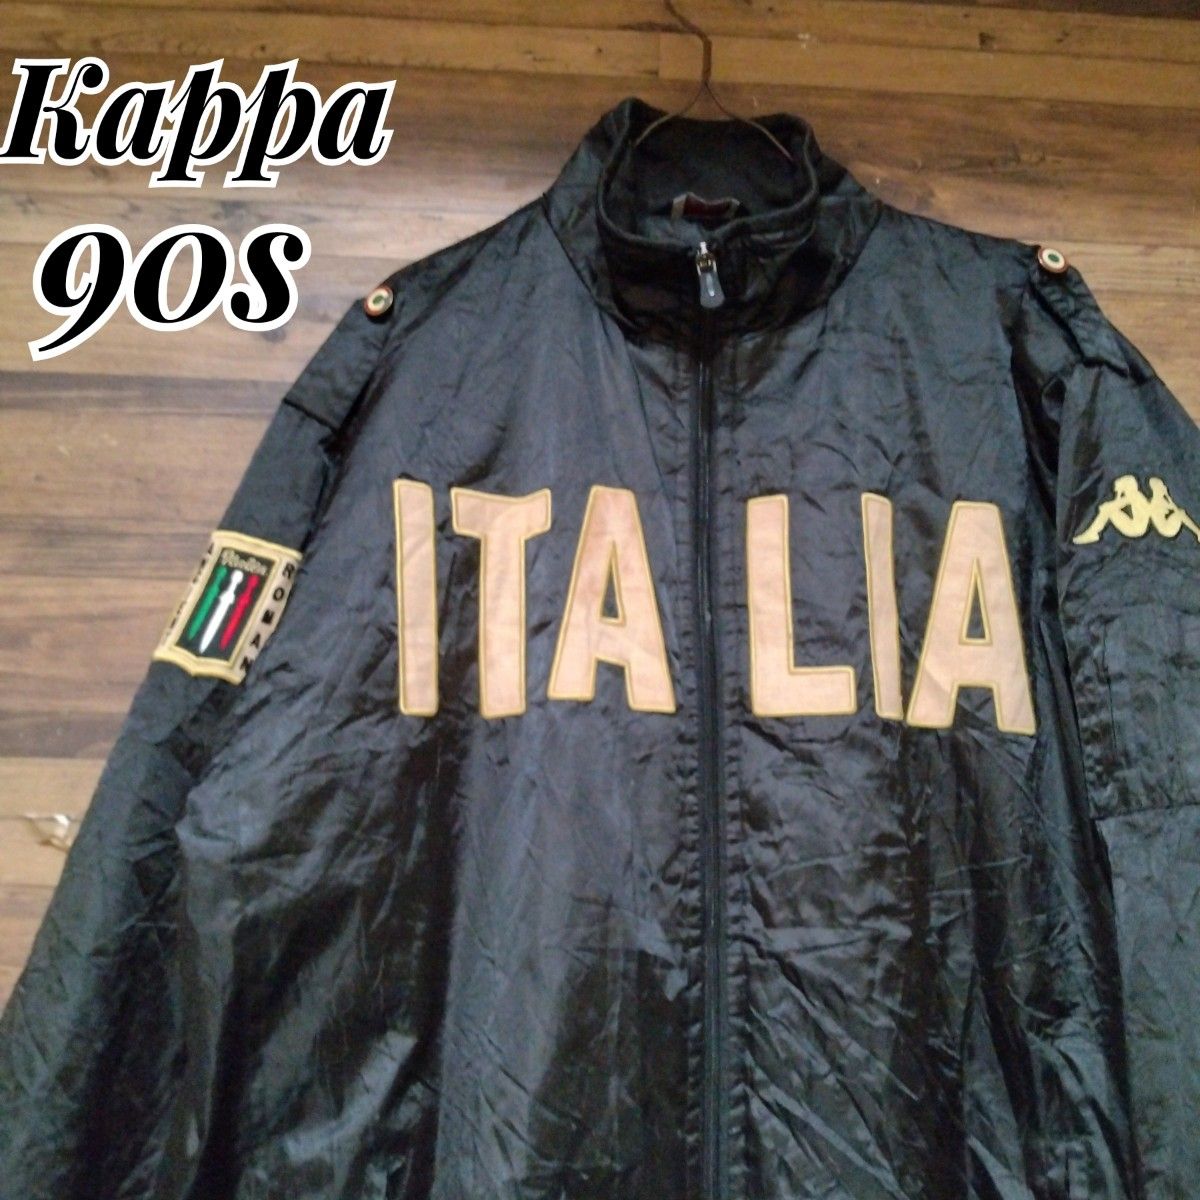 Kappa 90s イタリア代表 アズーリ エムブレム ナショナルチーム